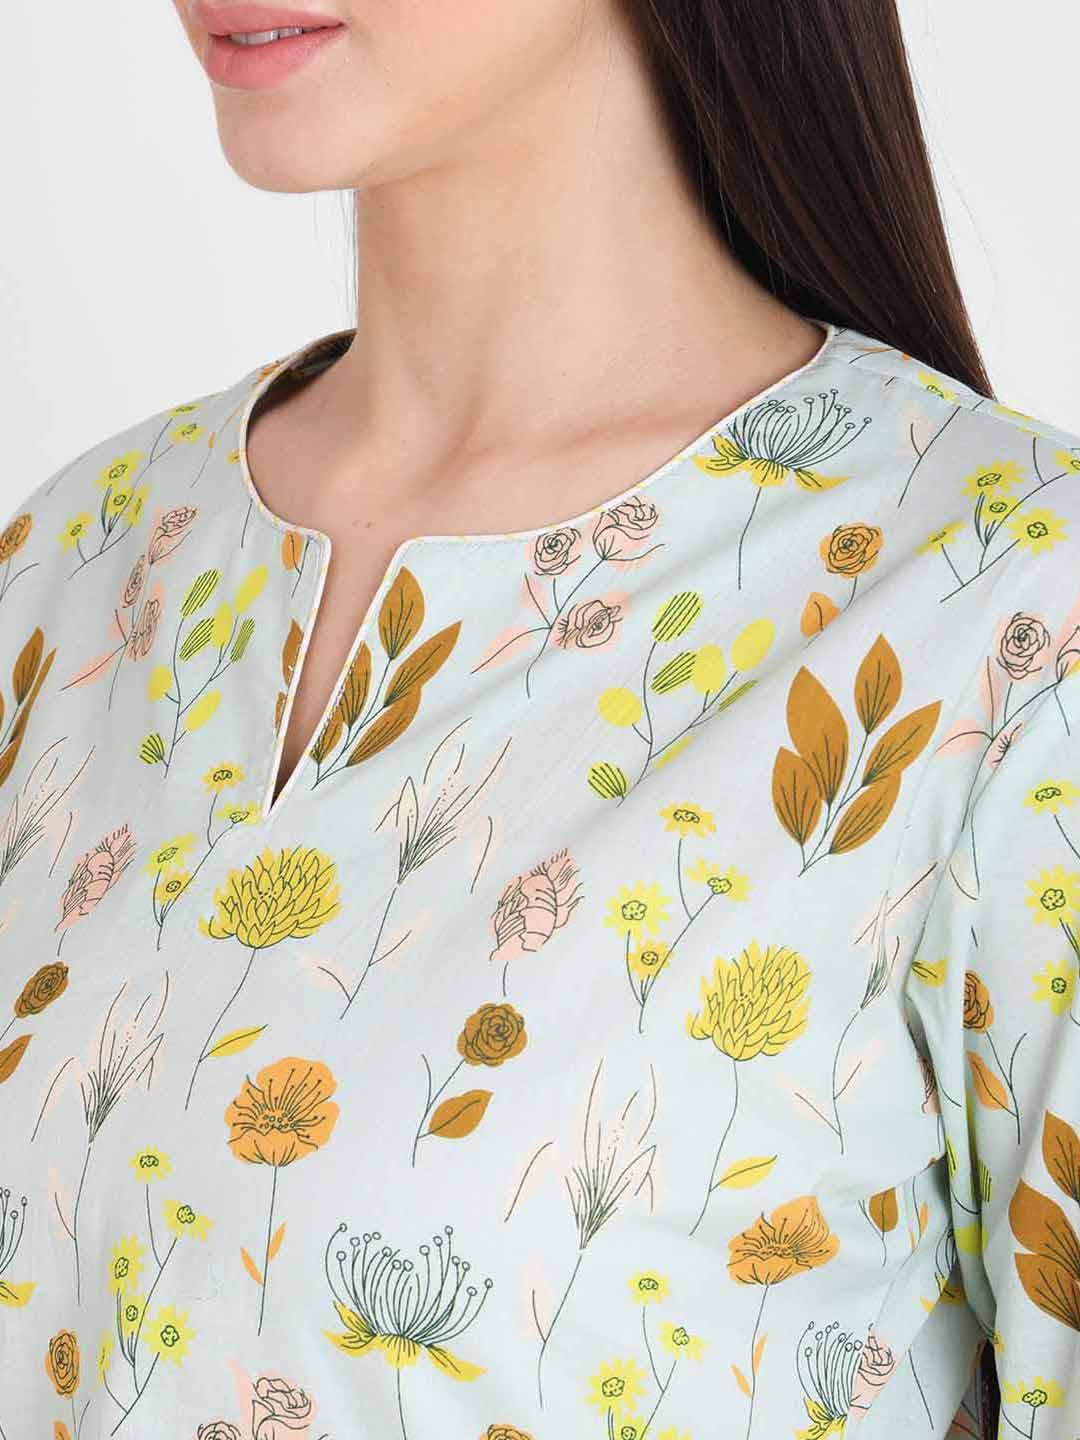 Pastel Floral Printed Nightsuit Set for Women